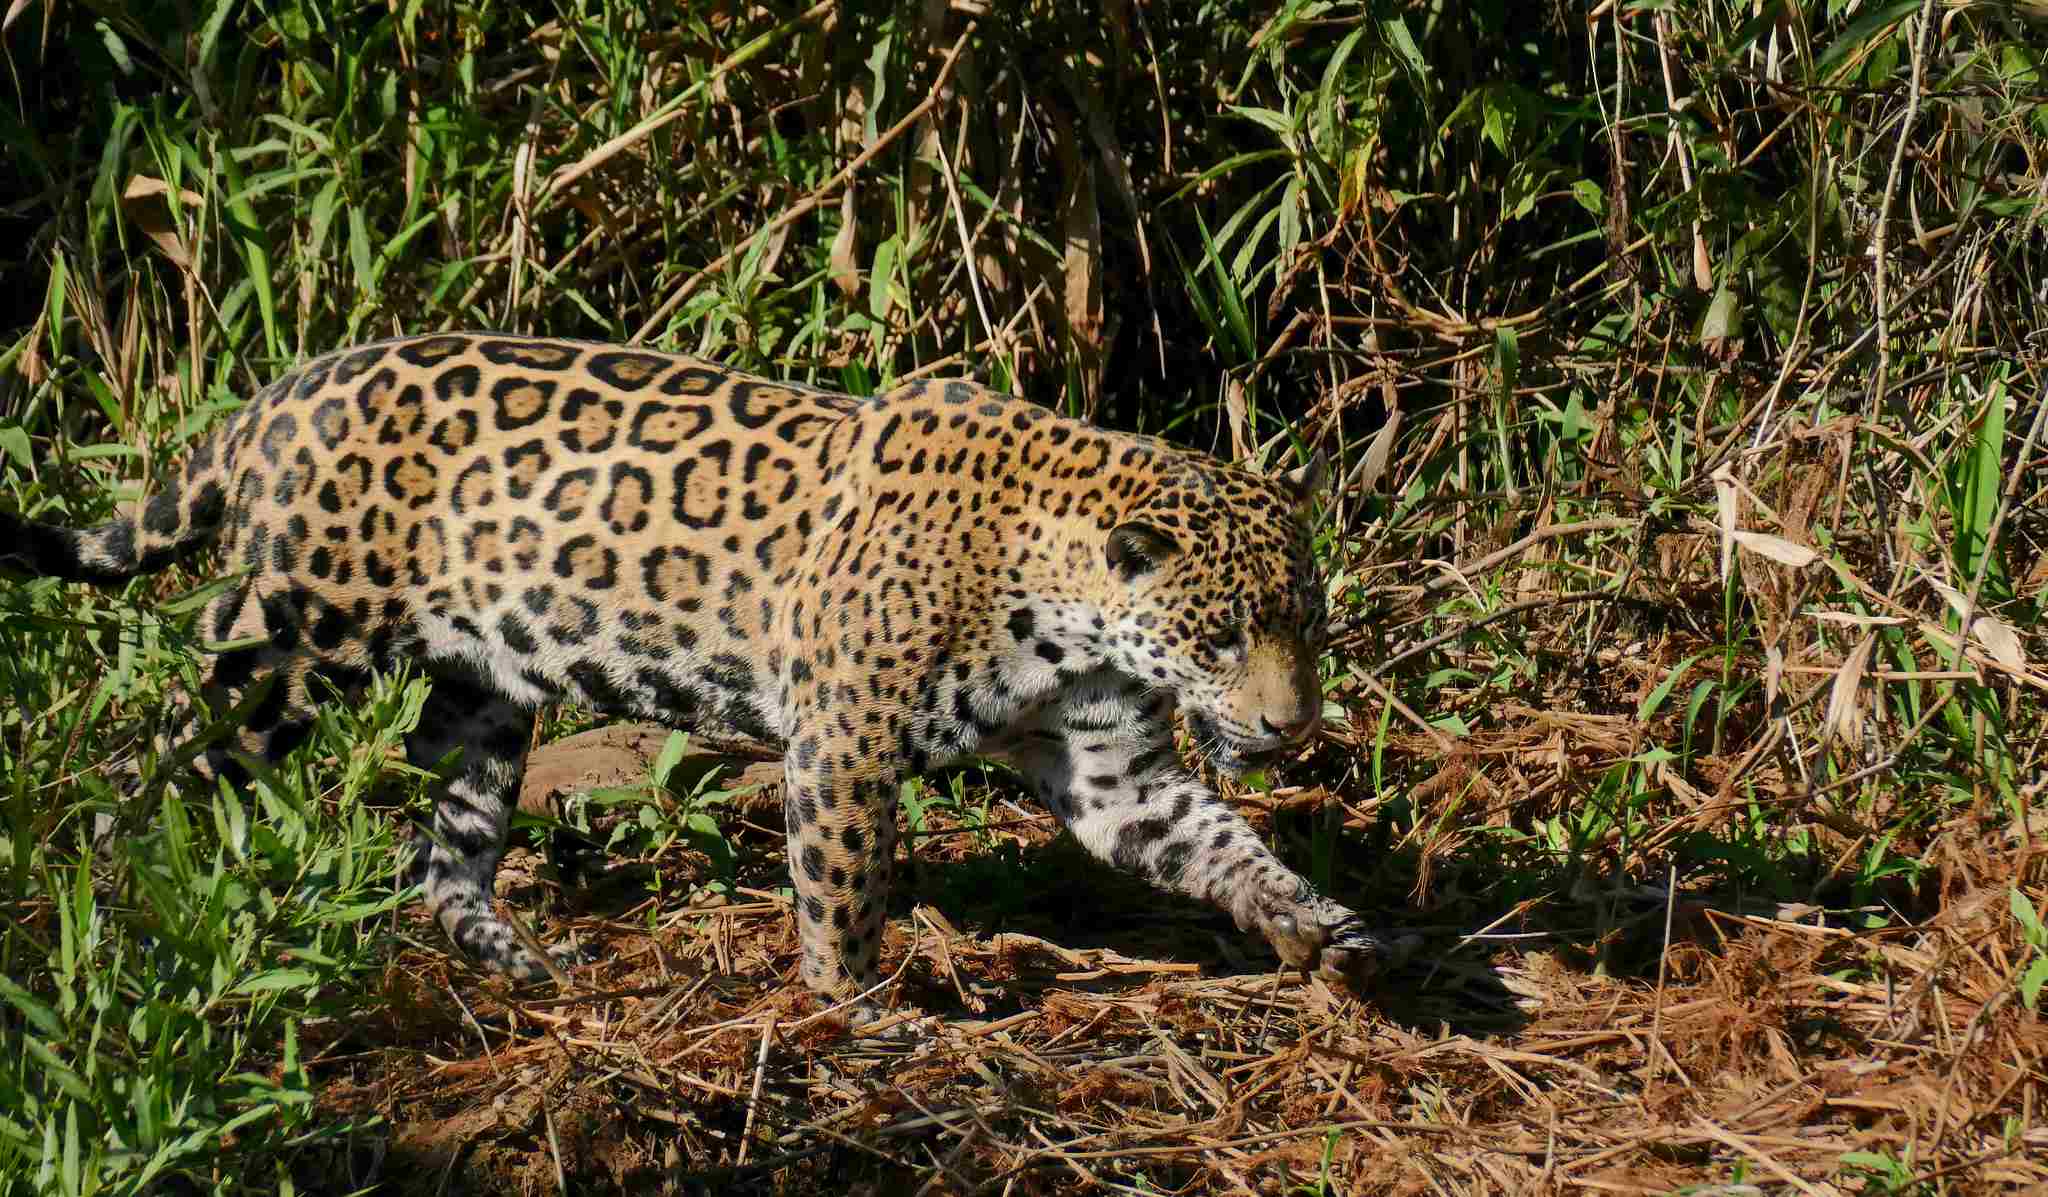 Cheetah Vs Jaguar: Taxonomic Disparity Can be Found Between Jaguars and Cheetahs (Credit: Bernard DUPONT 2019 .CC BY-SA 2.0.)